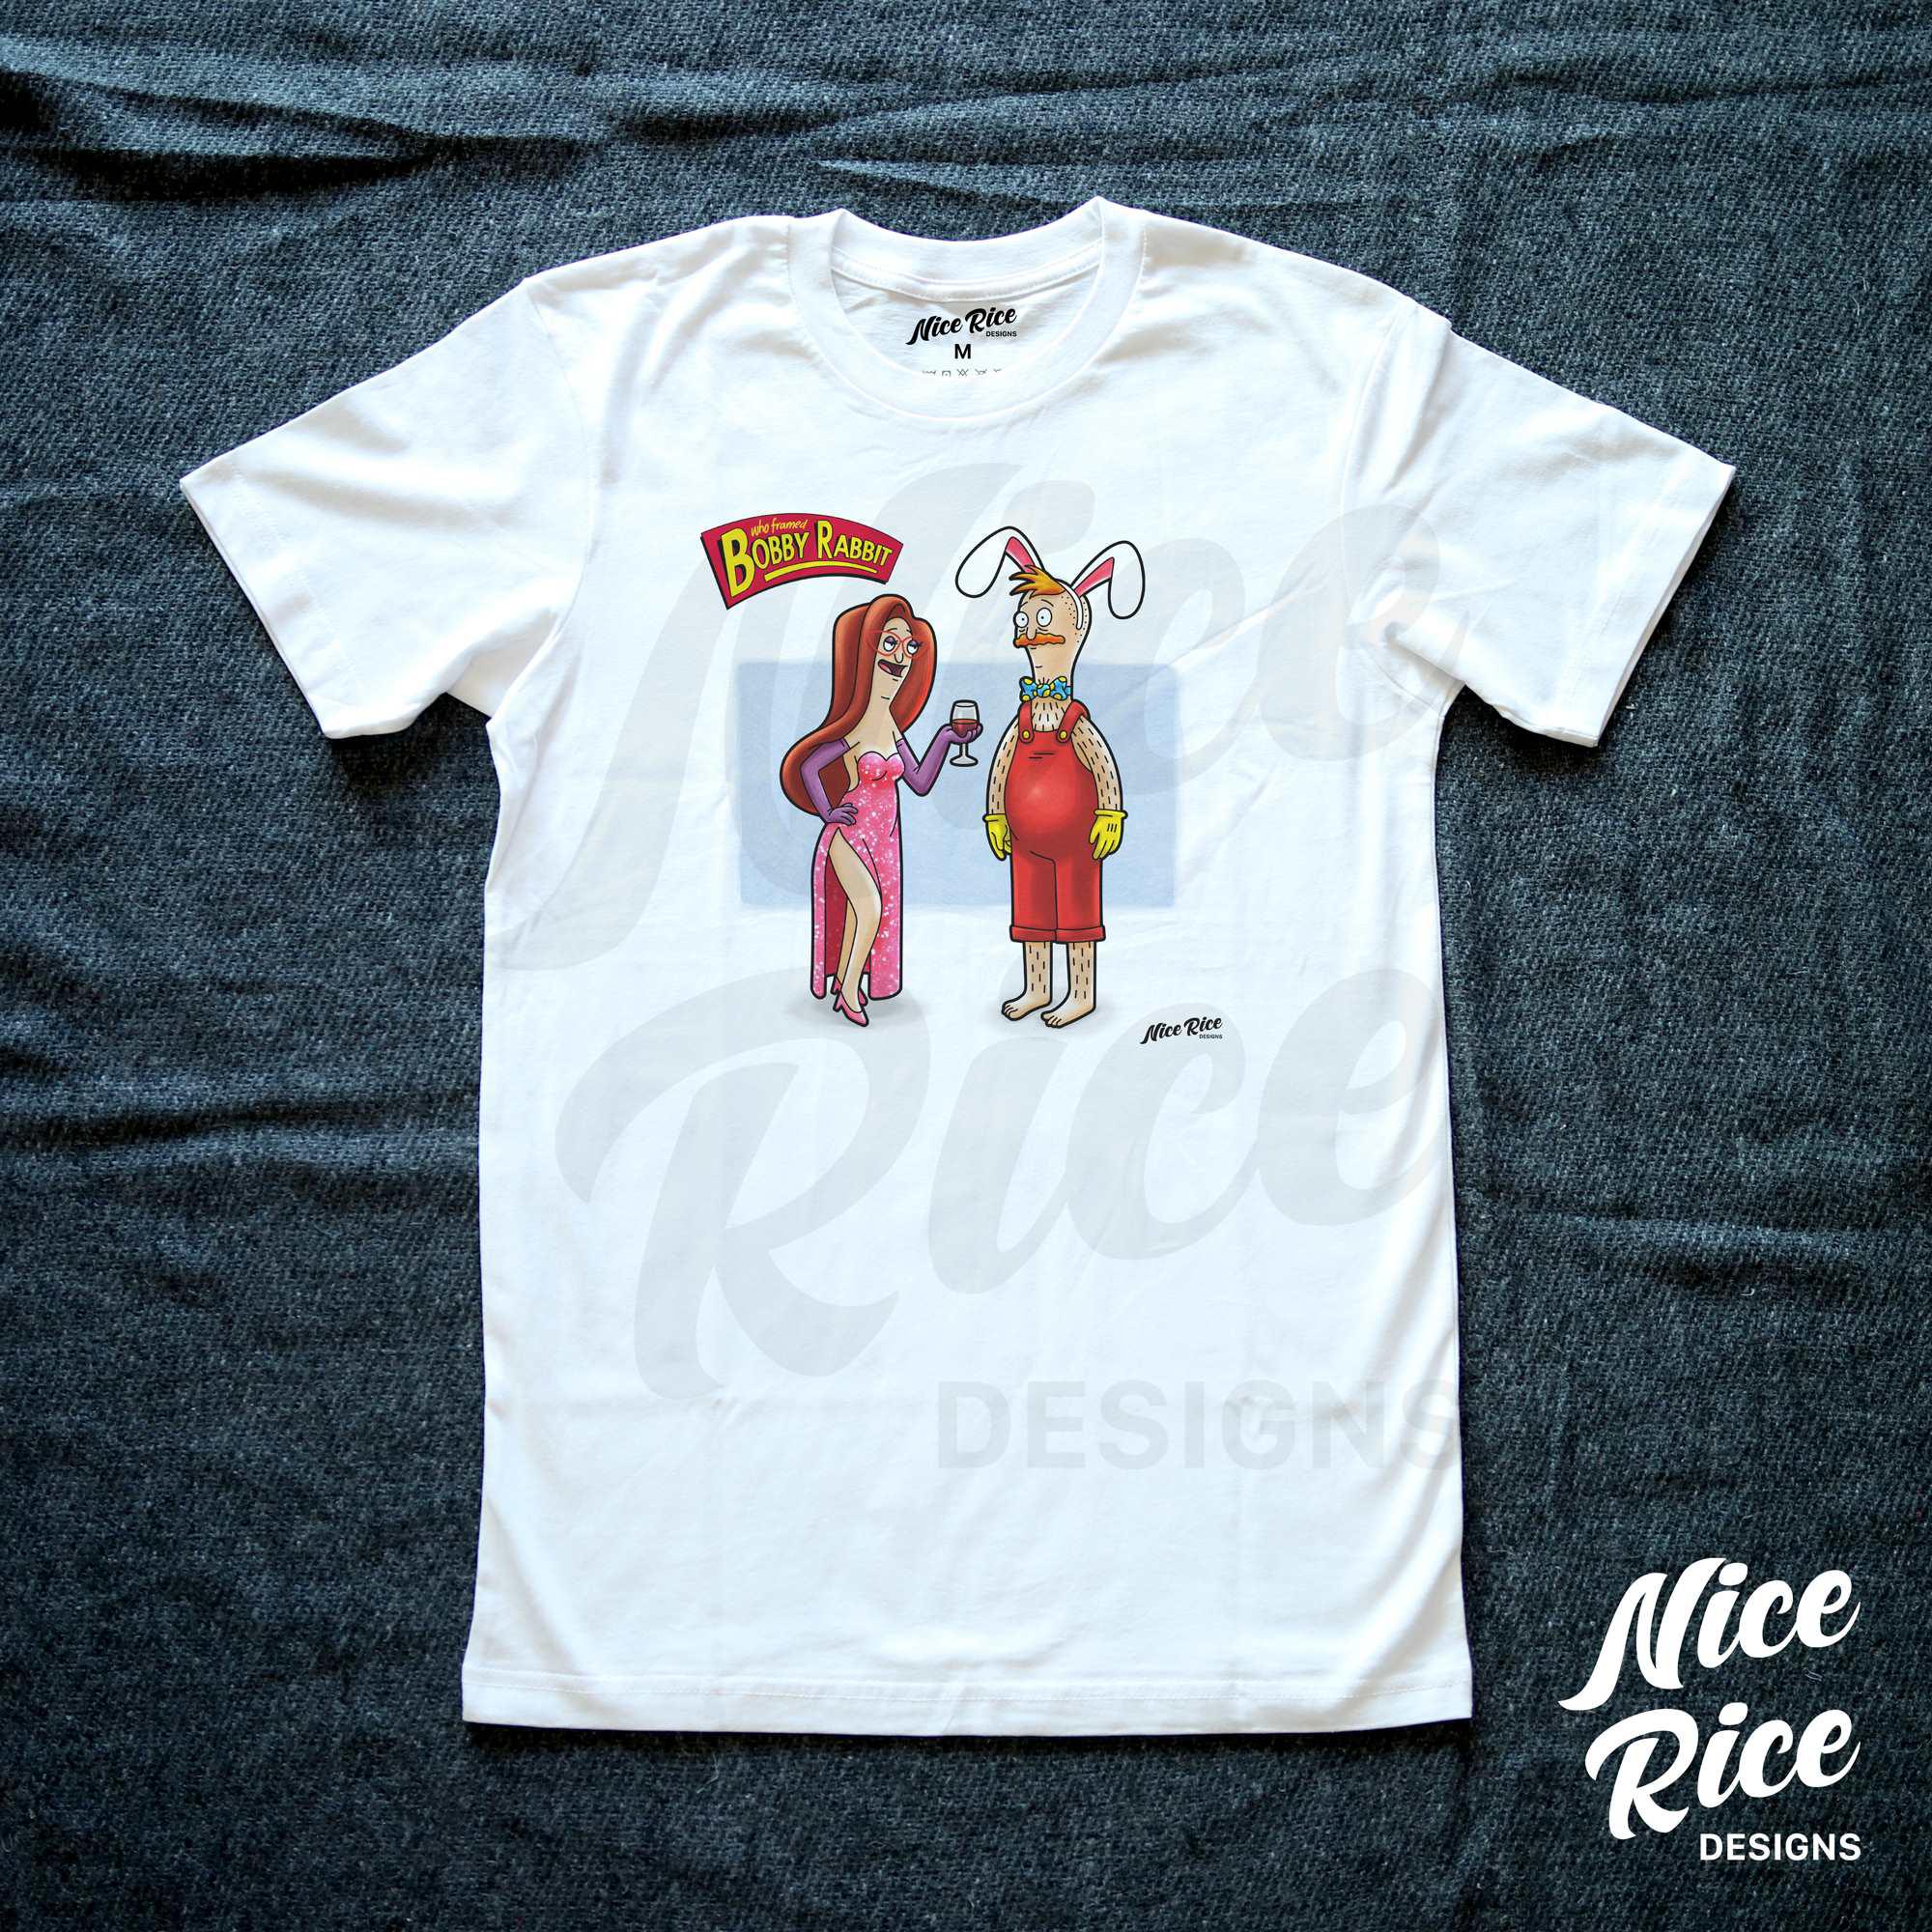 Bobby Rabbit Shirt by Nice Rice Designs